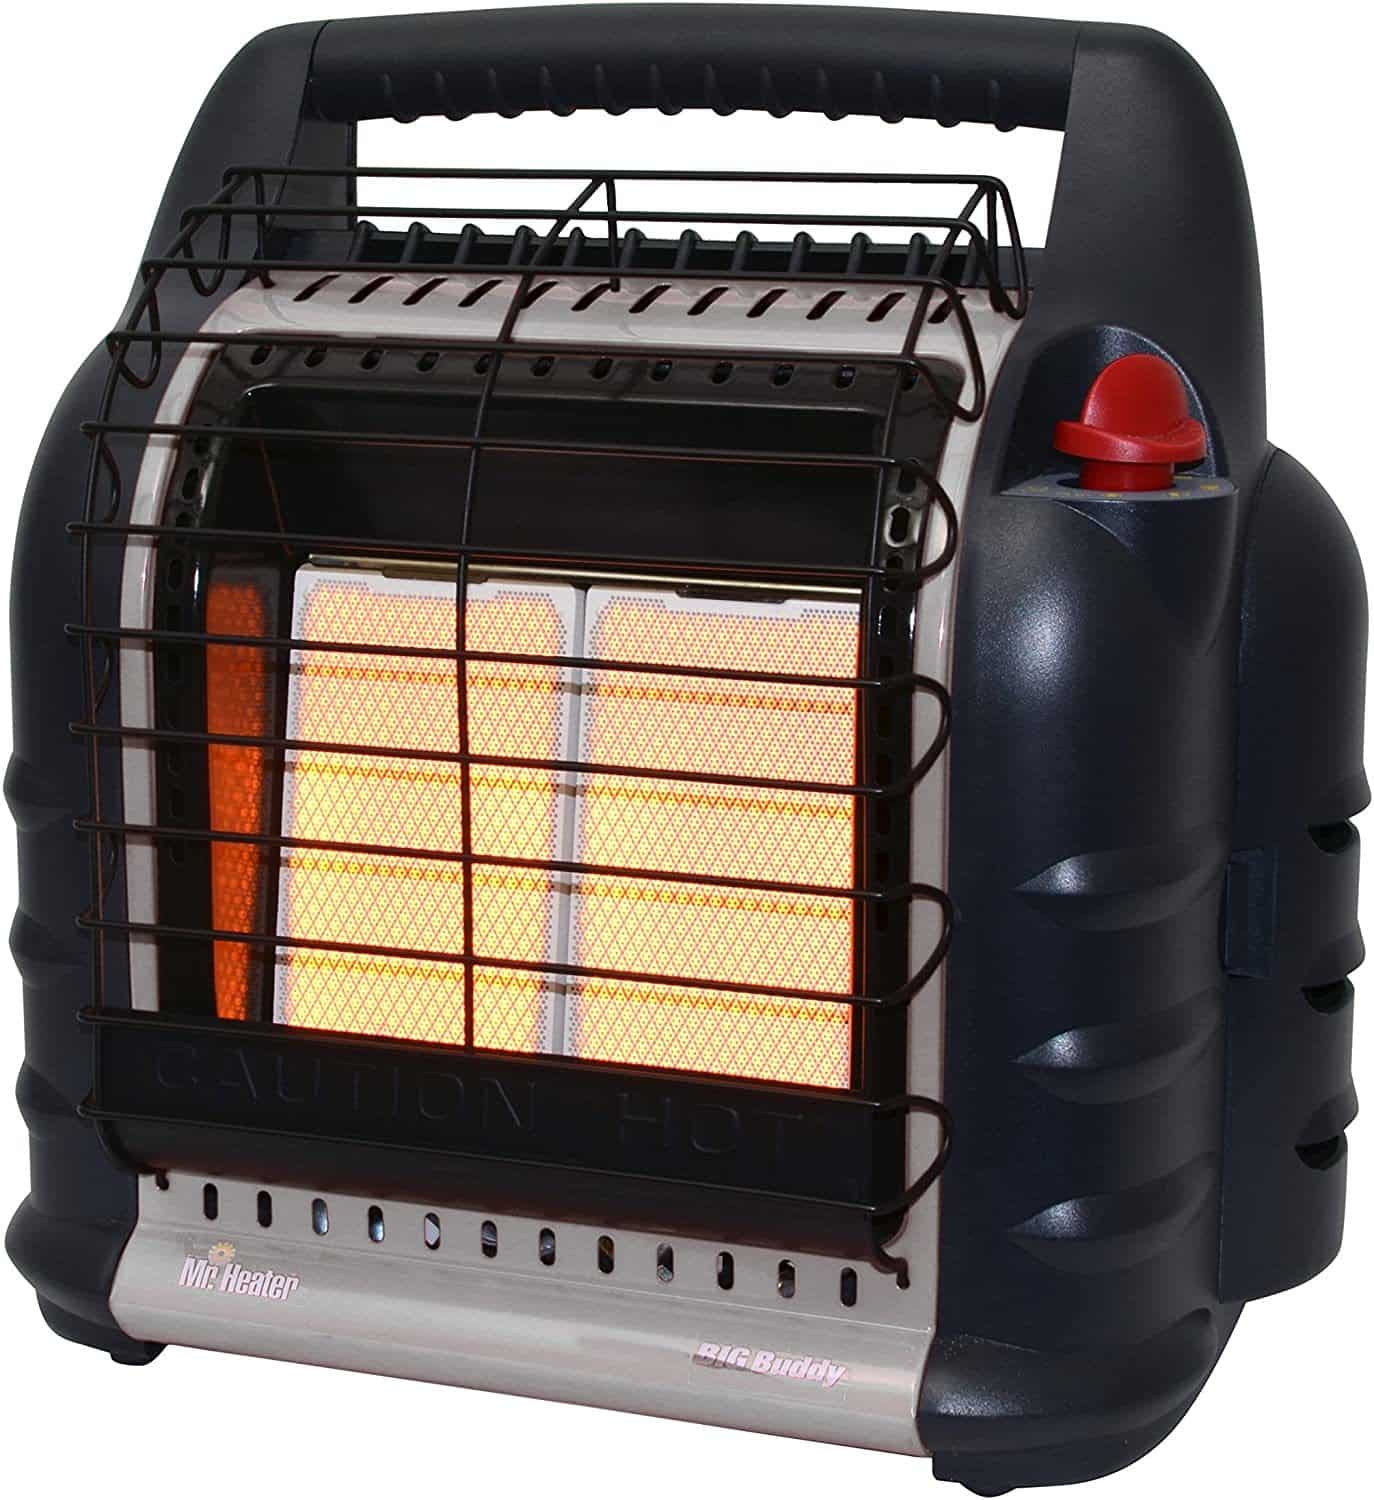 Mr. Heater F274830 Portable RV Propane Heater